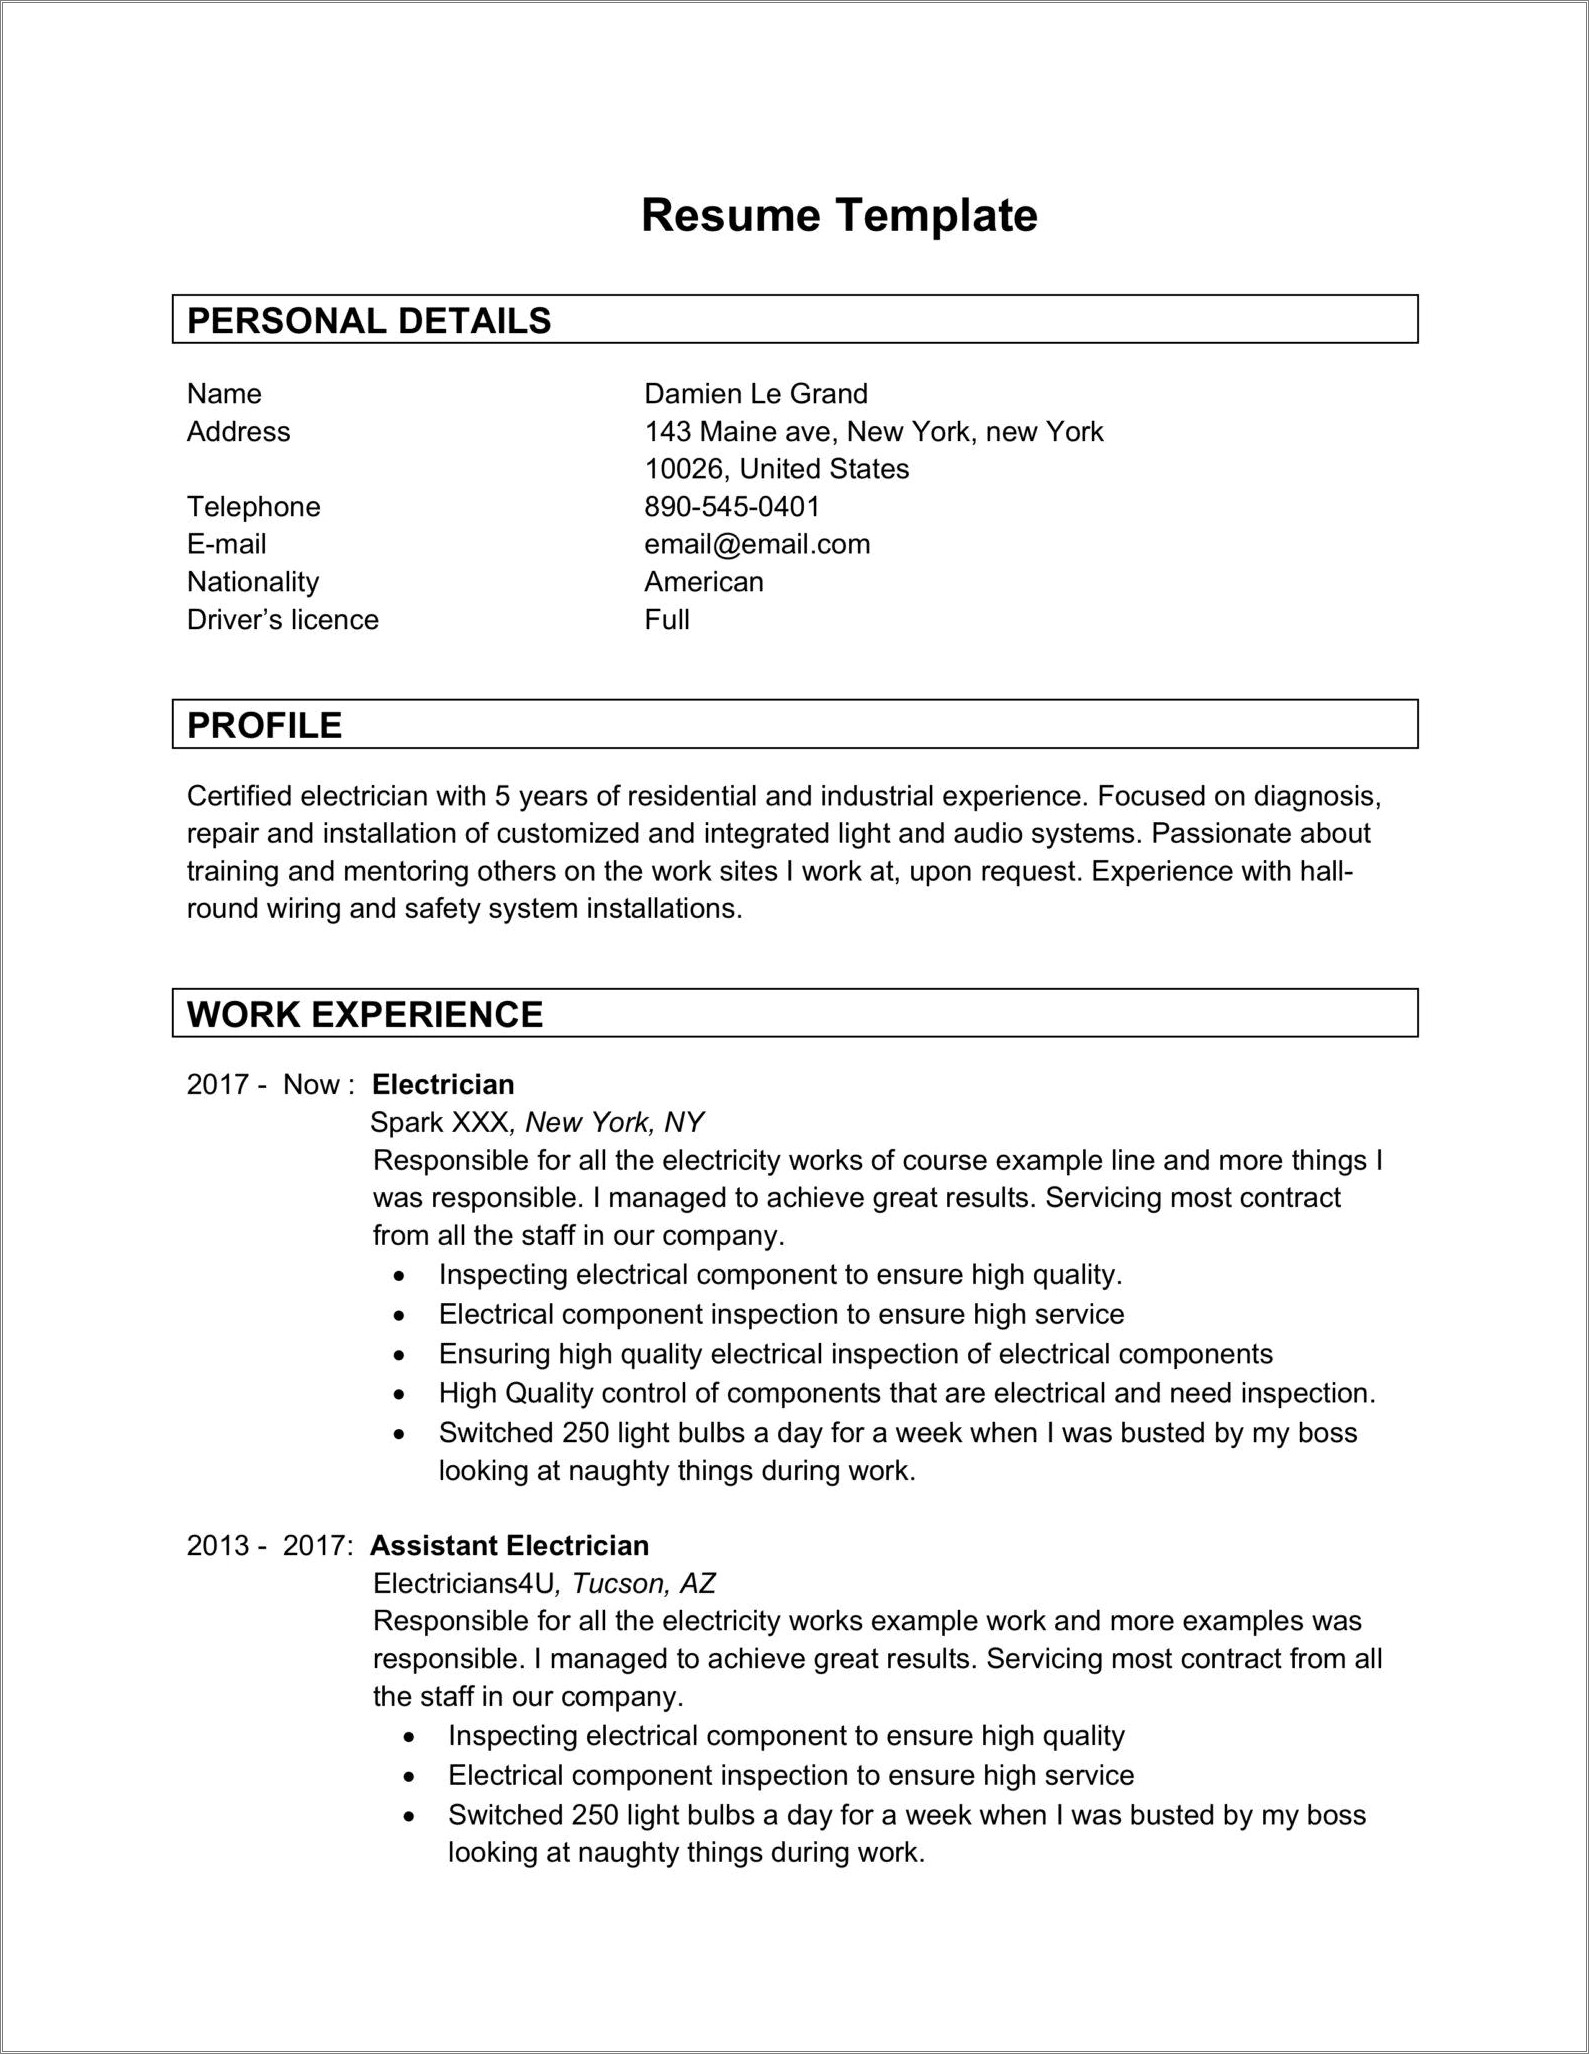 free-resume-templates-microsoft-word-2013-resume-example-gallery